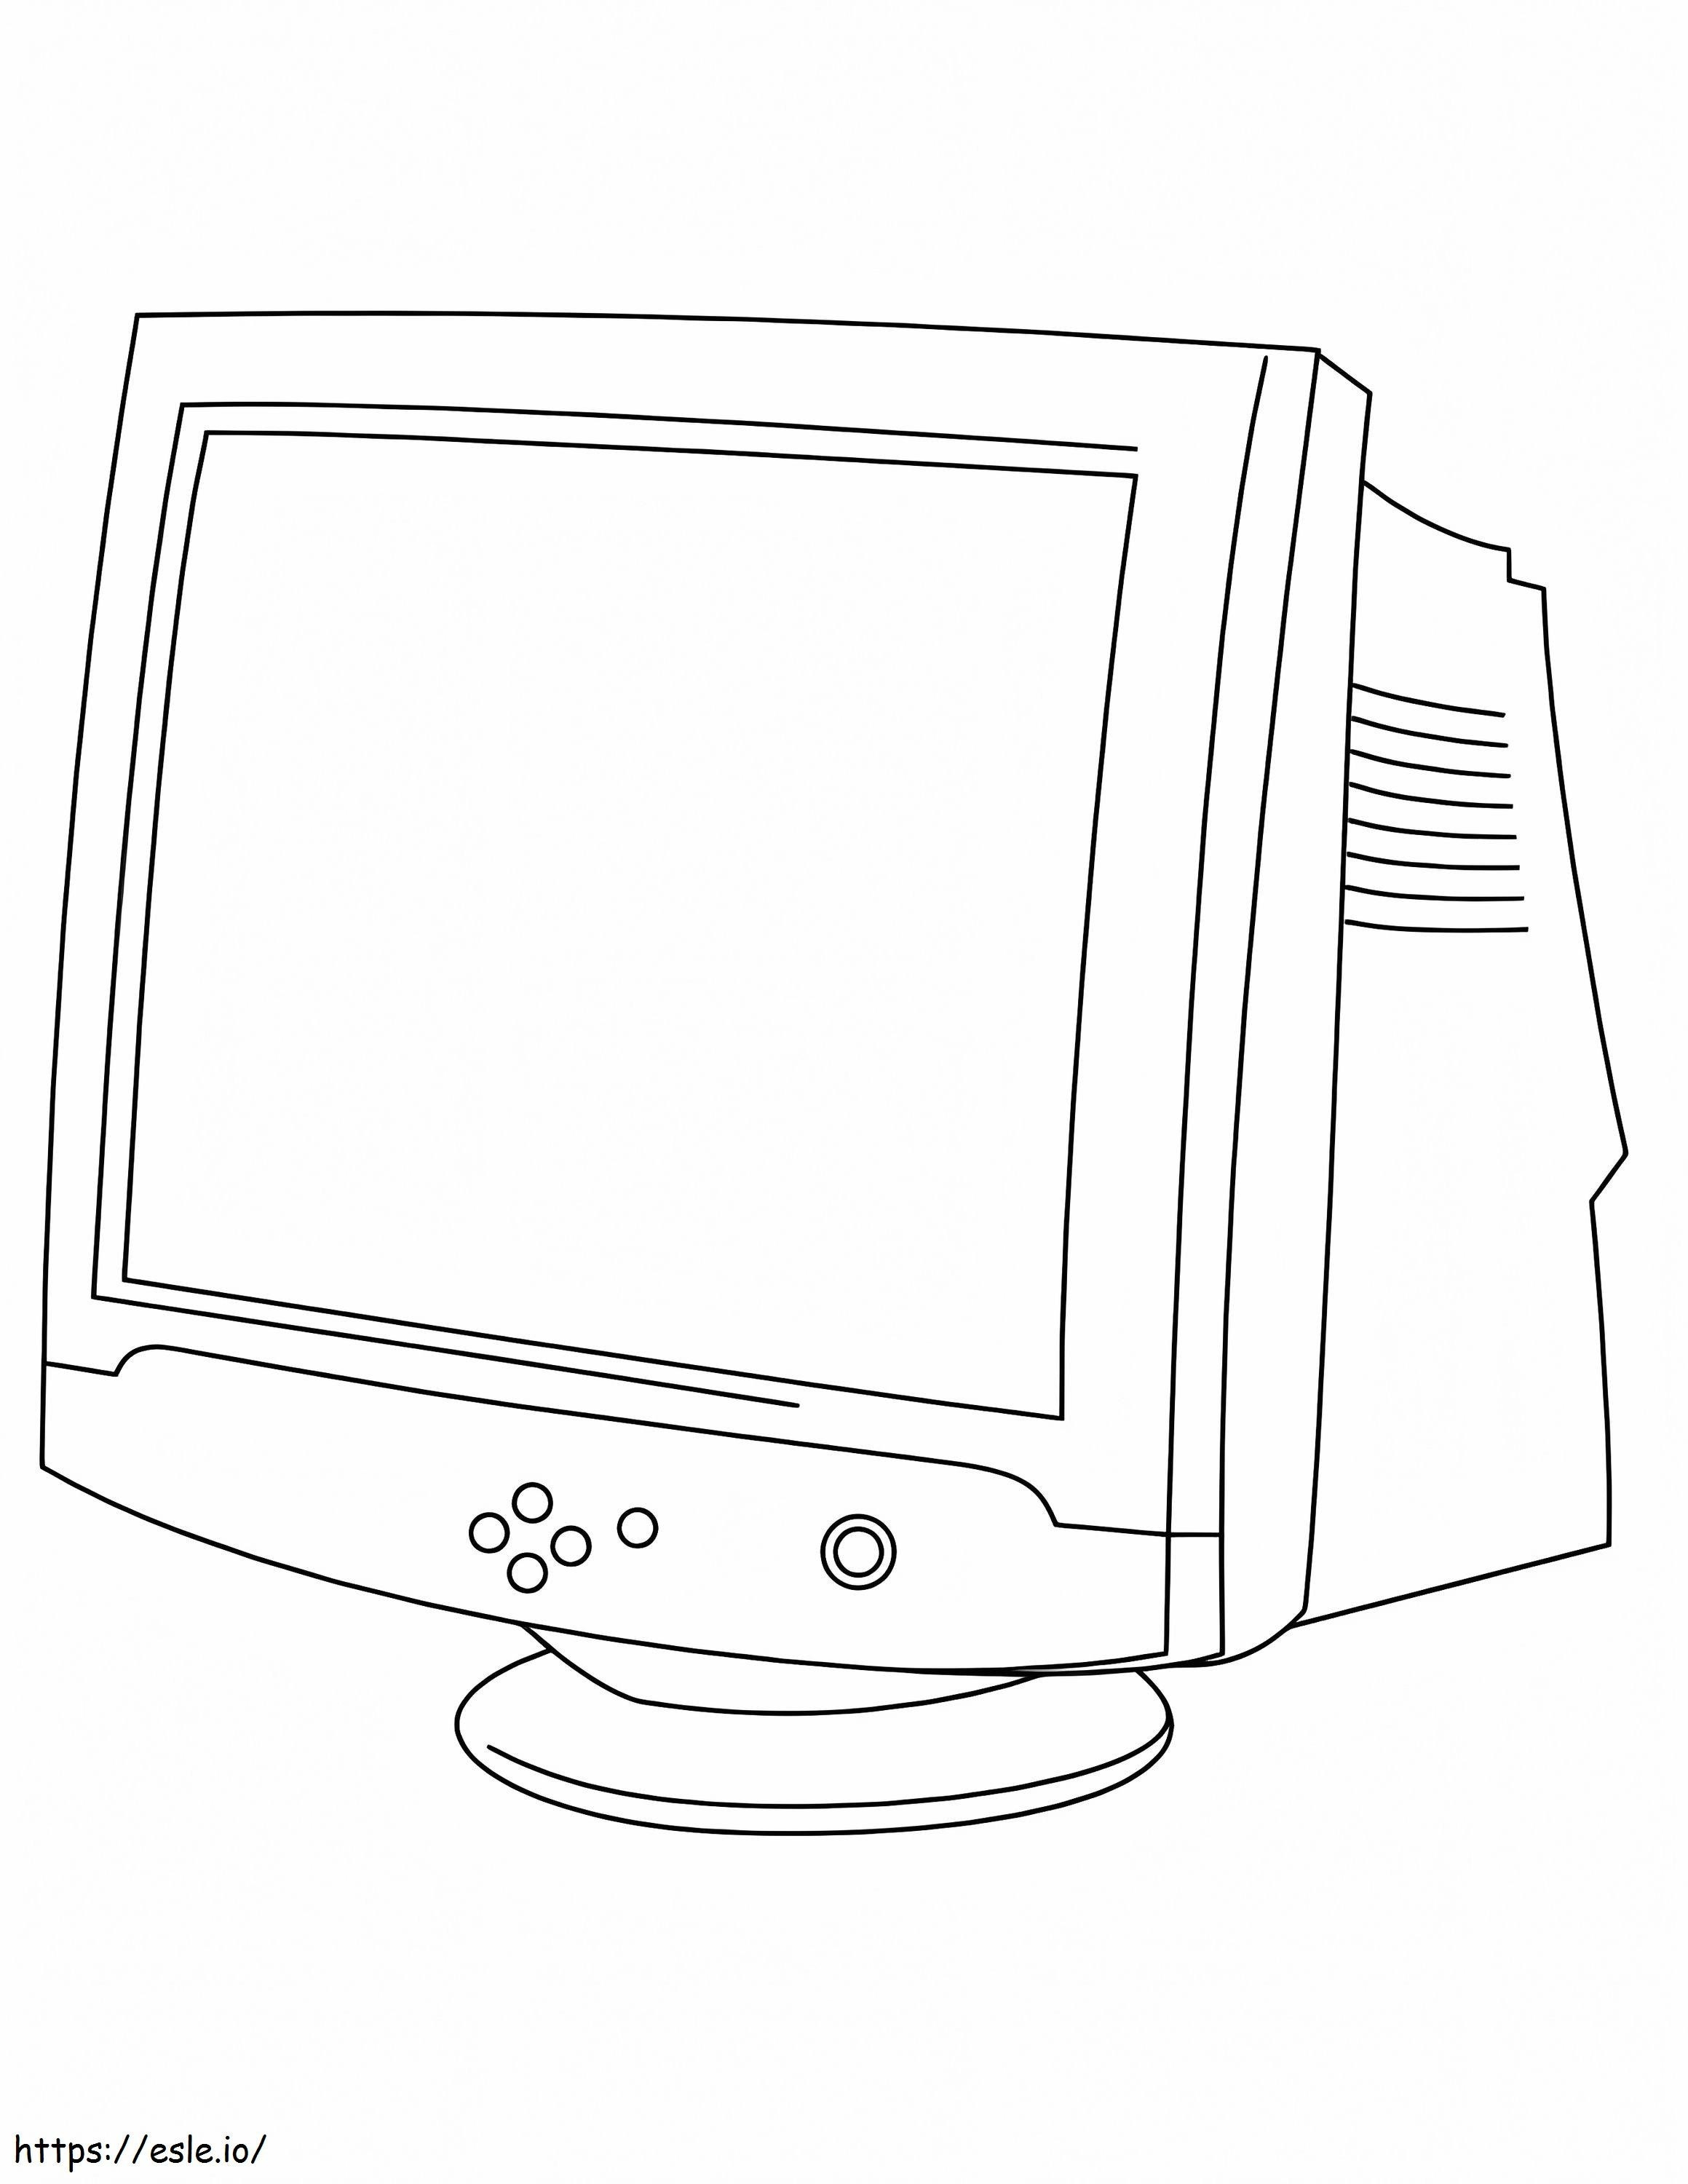 Ekran komputera kolorowanka